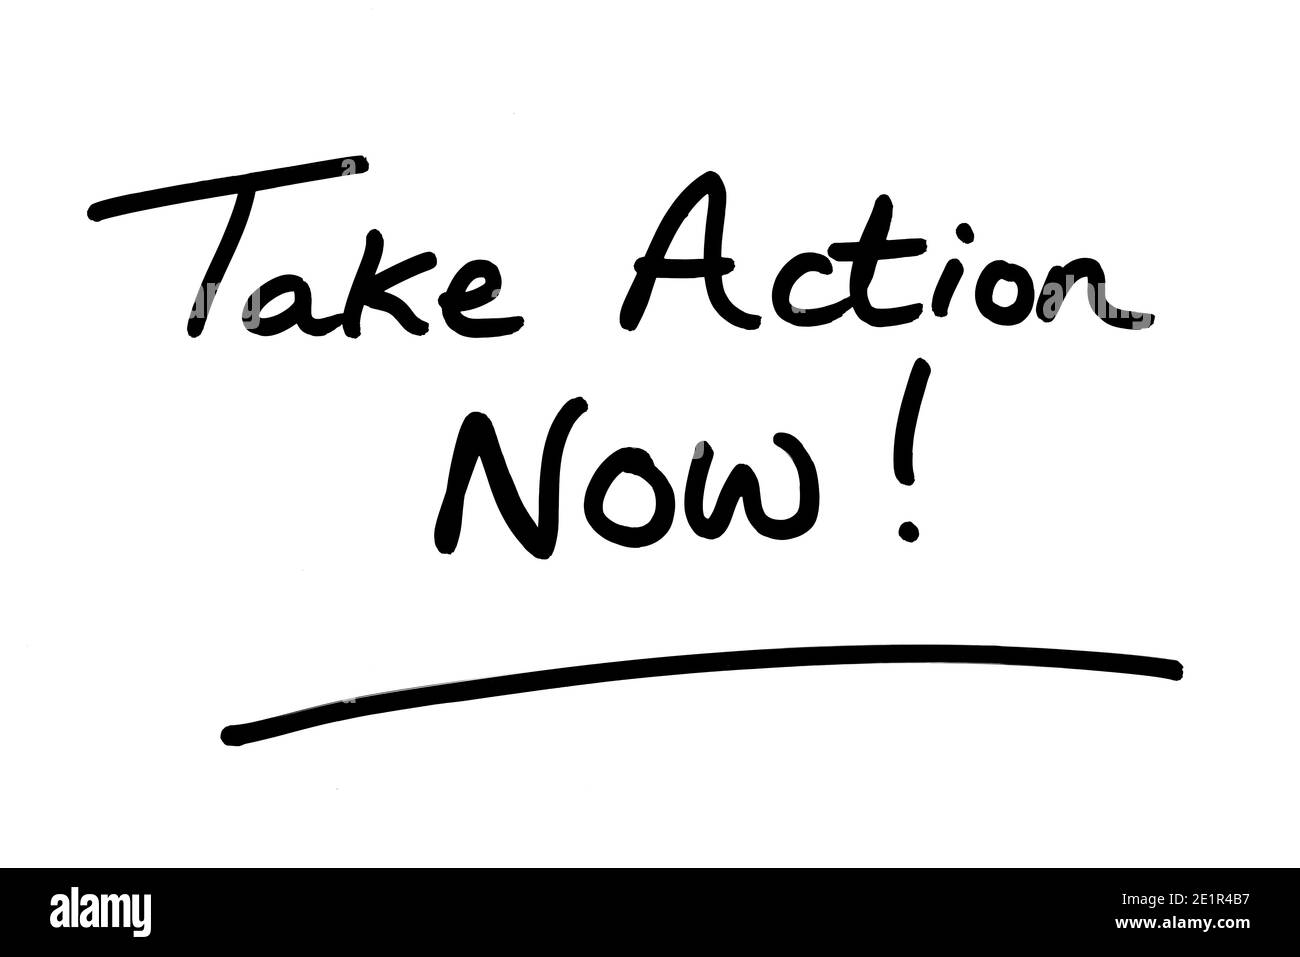 Take Action Now! handwritten on a white background. Stock Photo